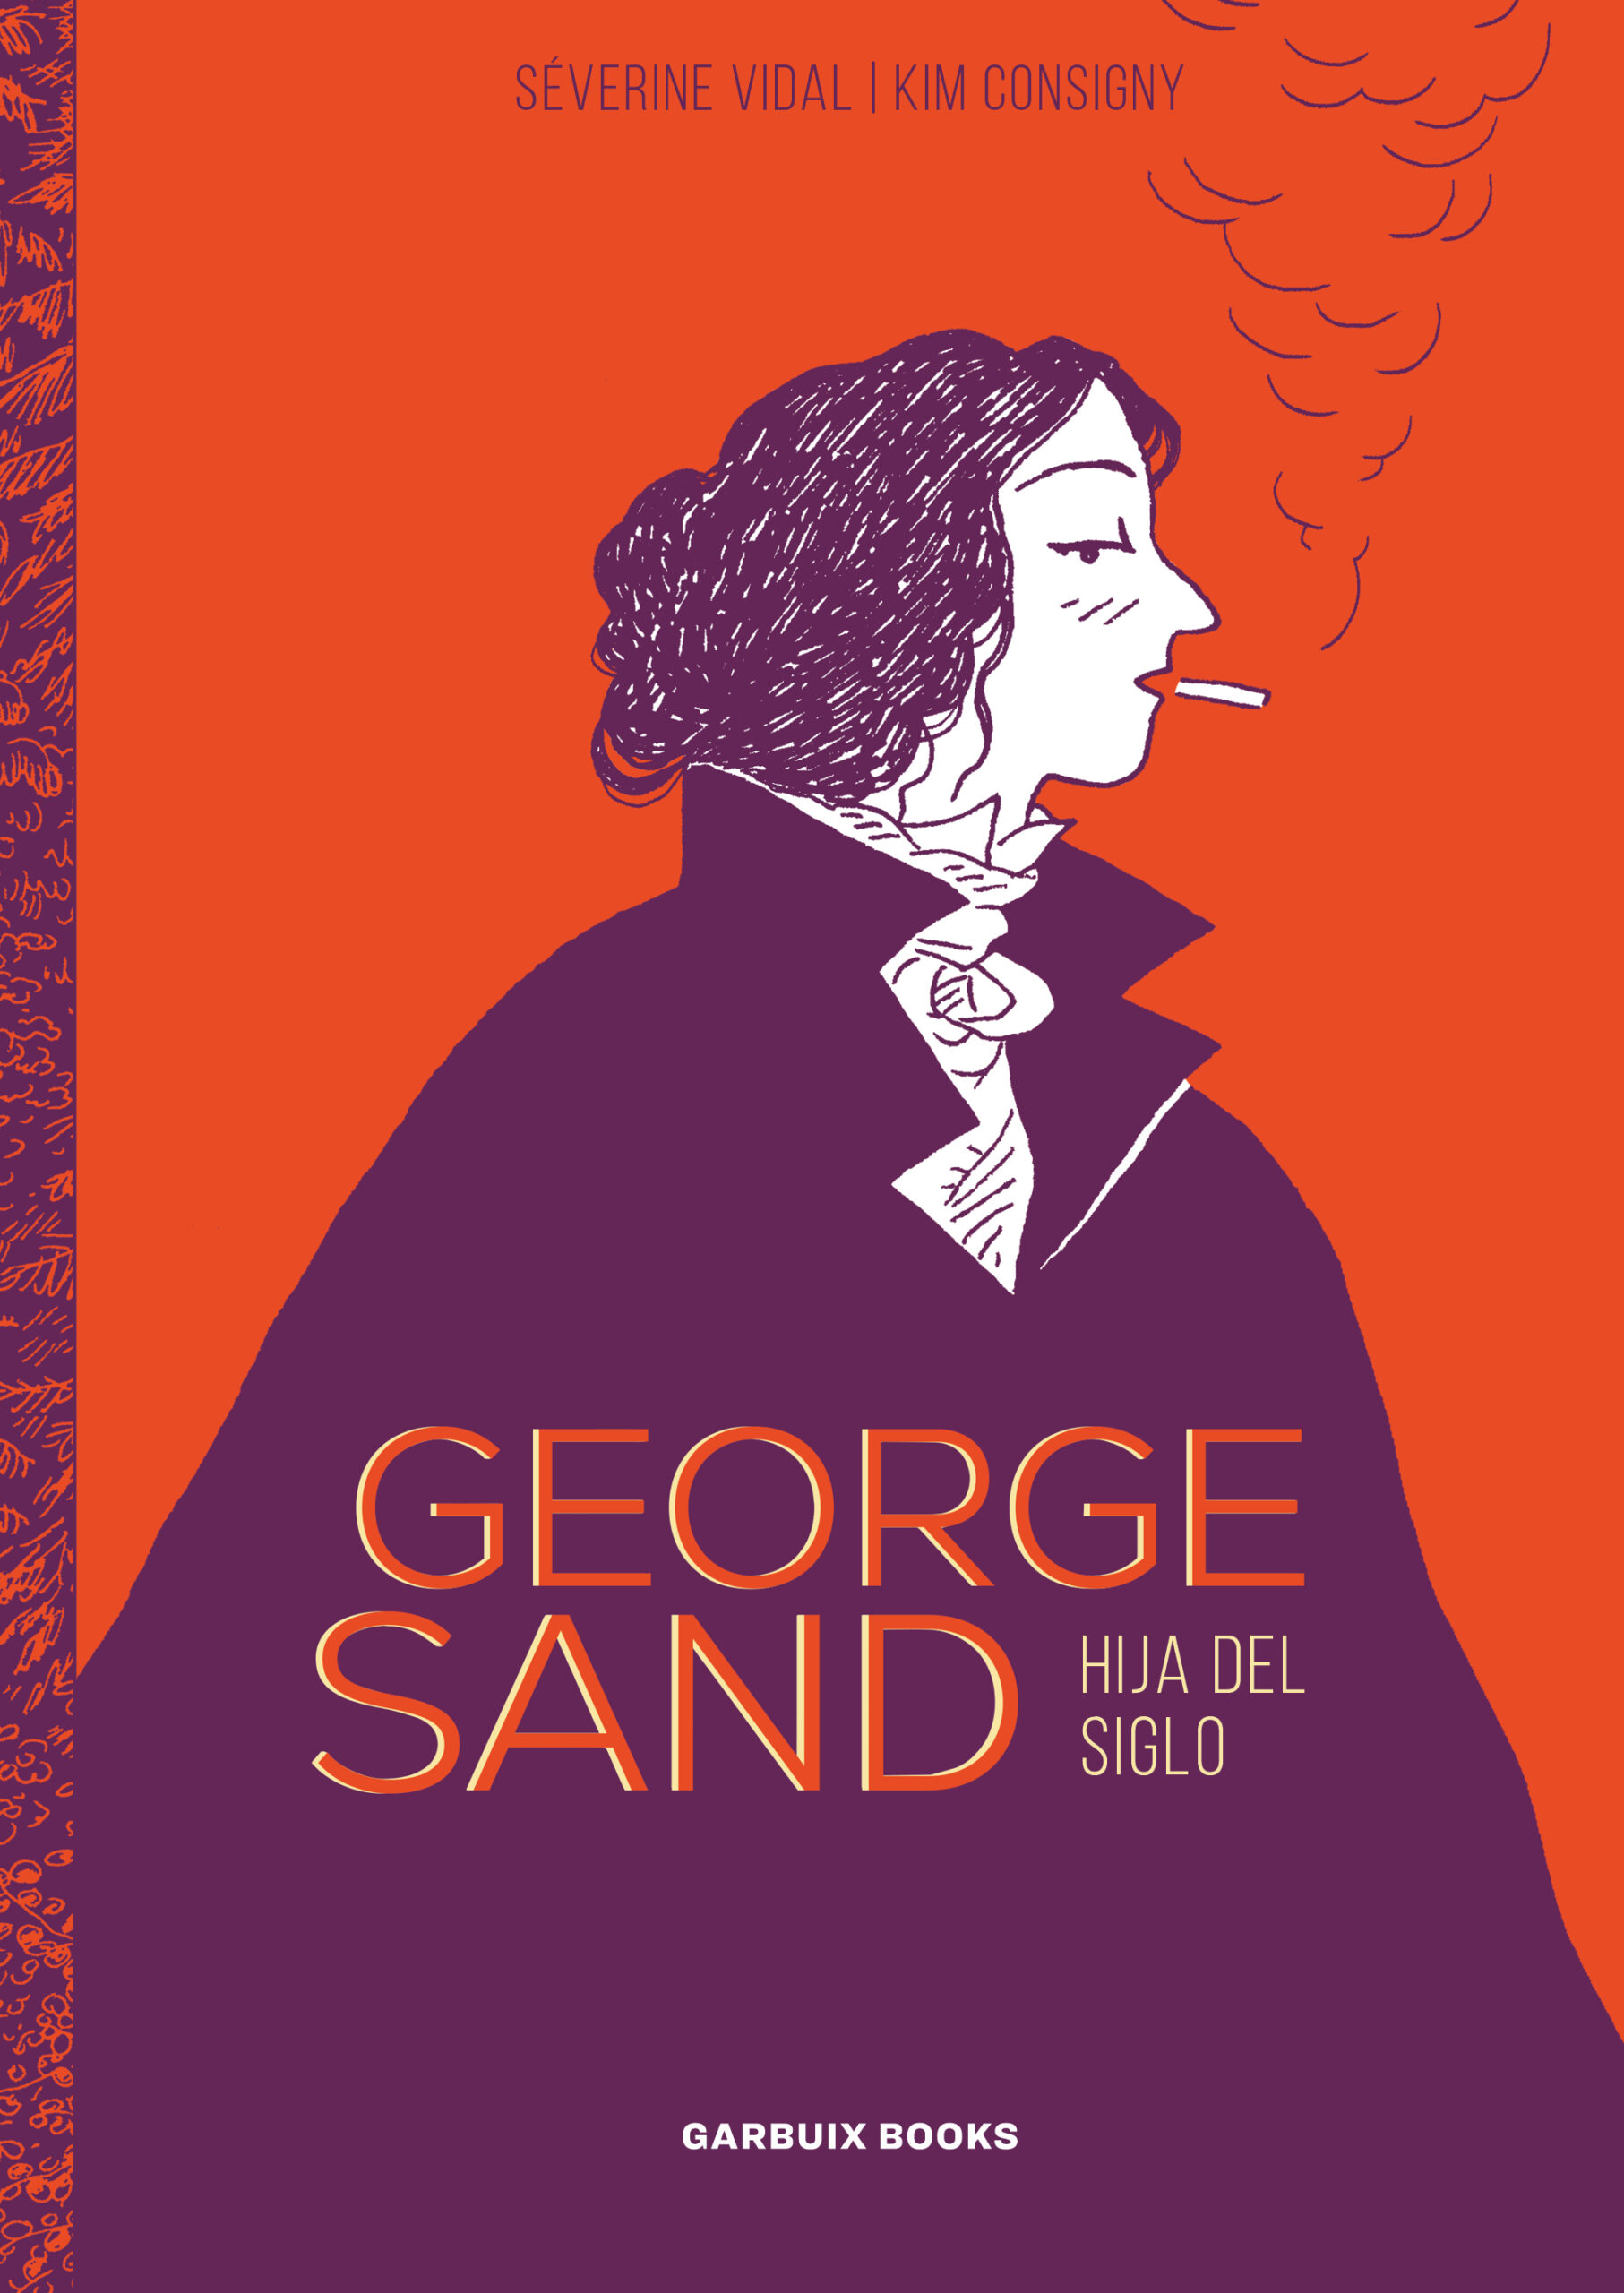 Séverine Vidal, Kim Consigny: George Sand (GraphicNovel, Español language, Garbuix Books)